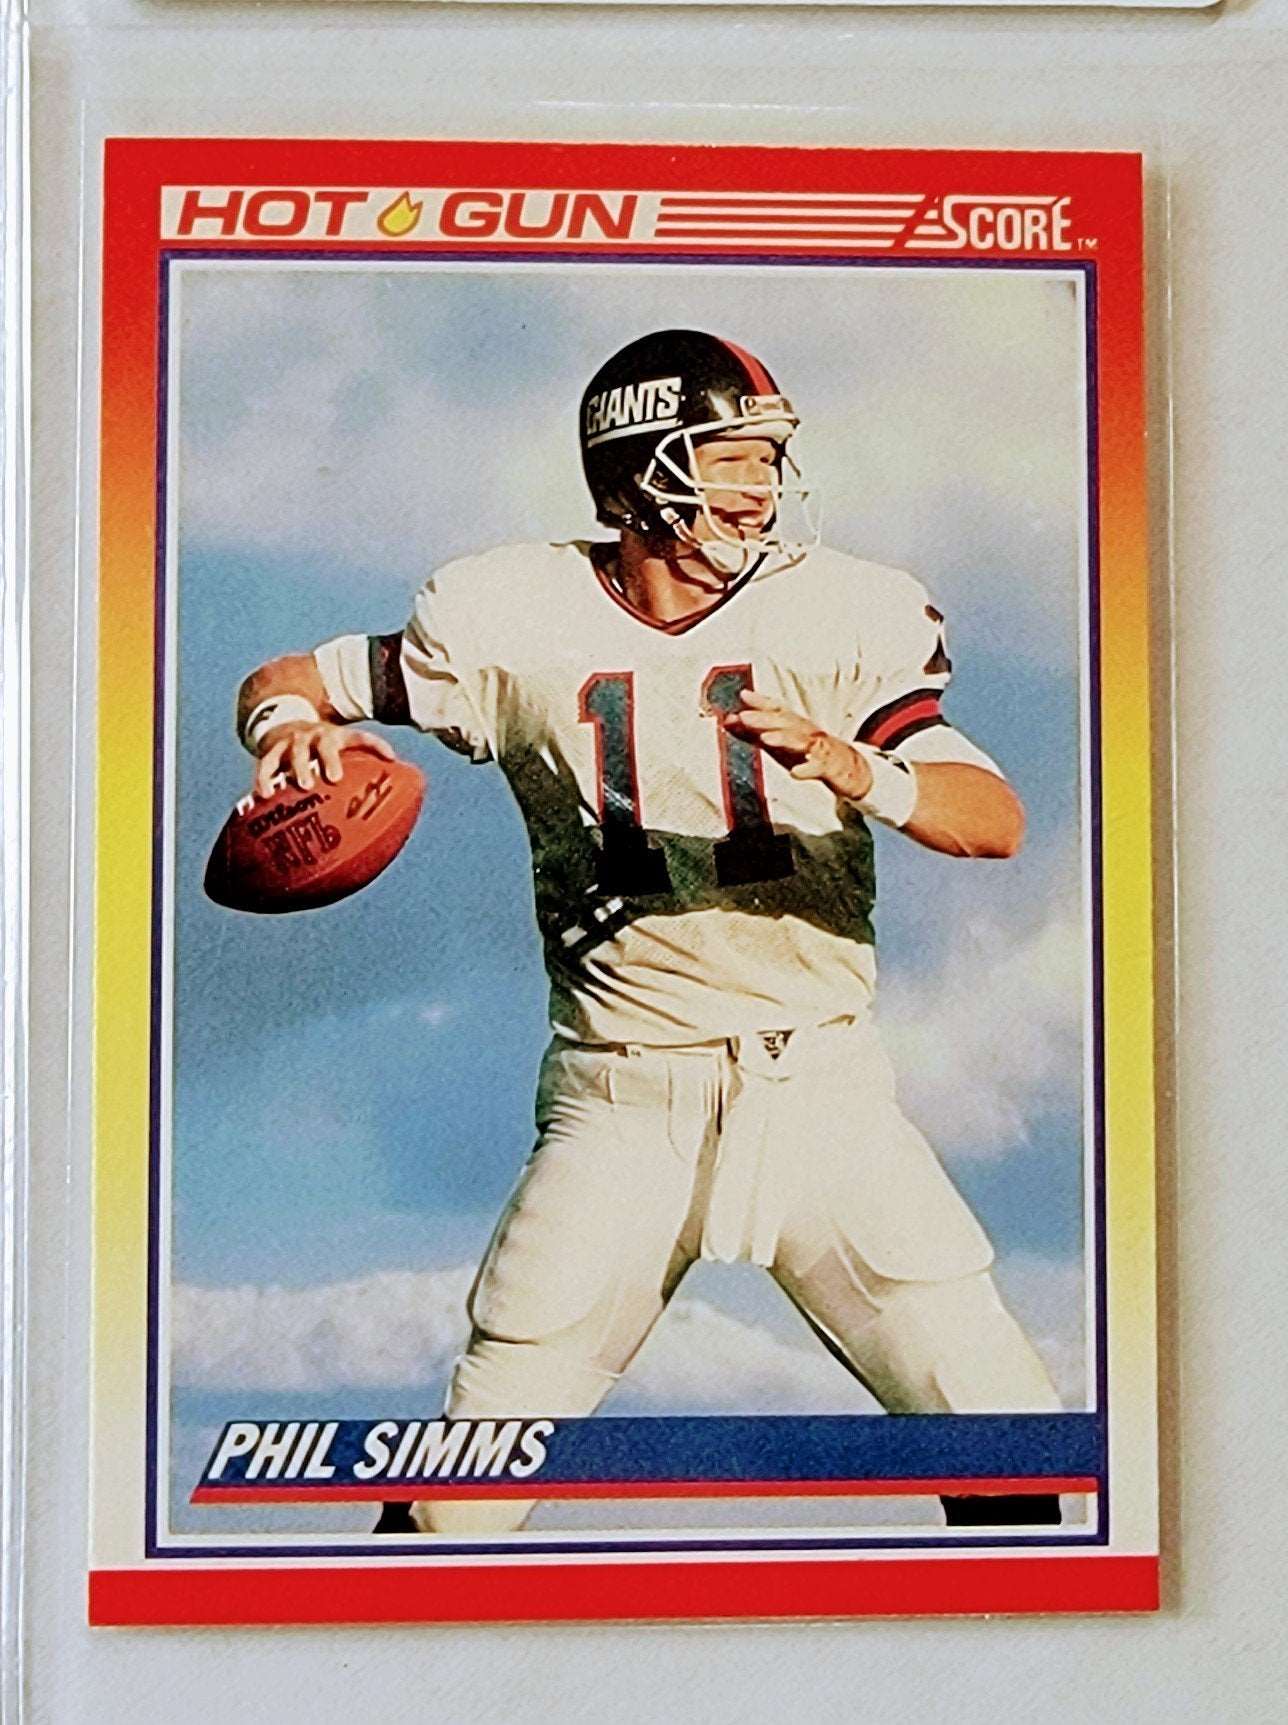 1990 Score Phil Simms Hot Guns Insert Football Card simple Xclusive Collectibles   